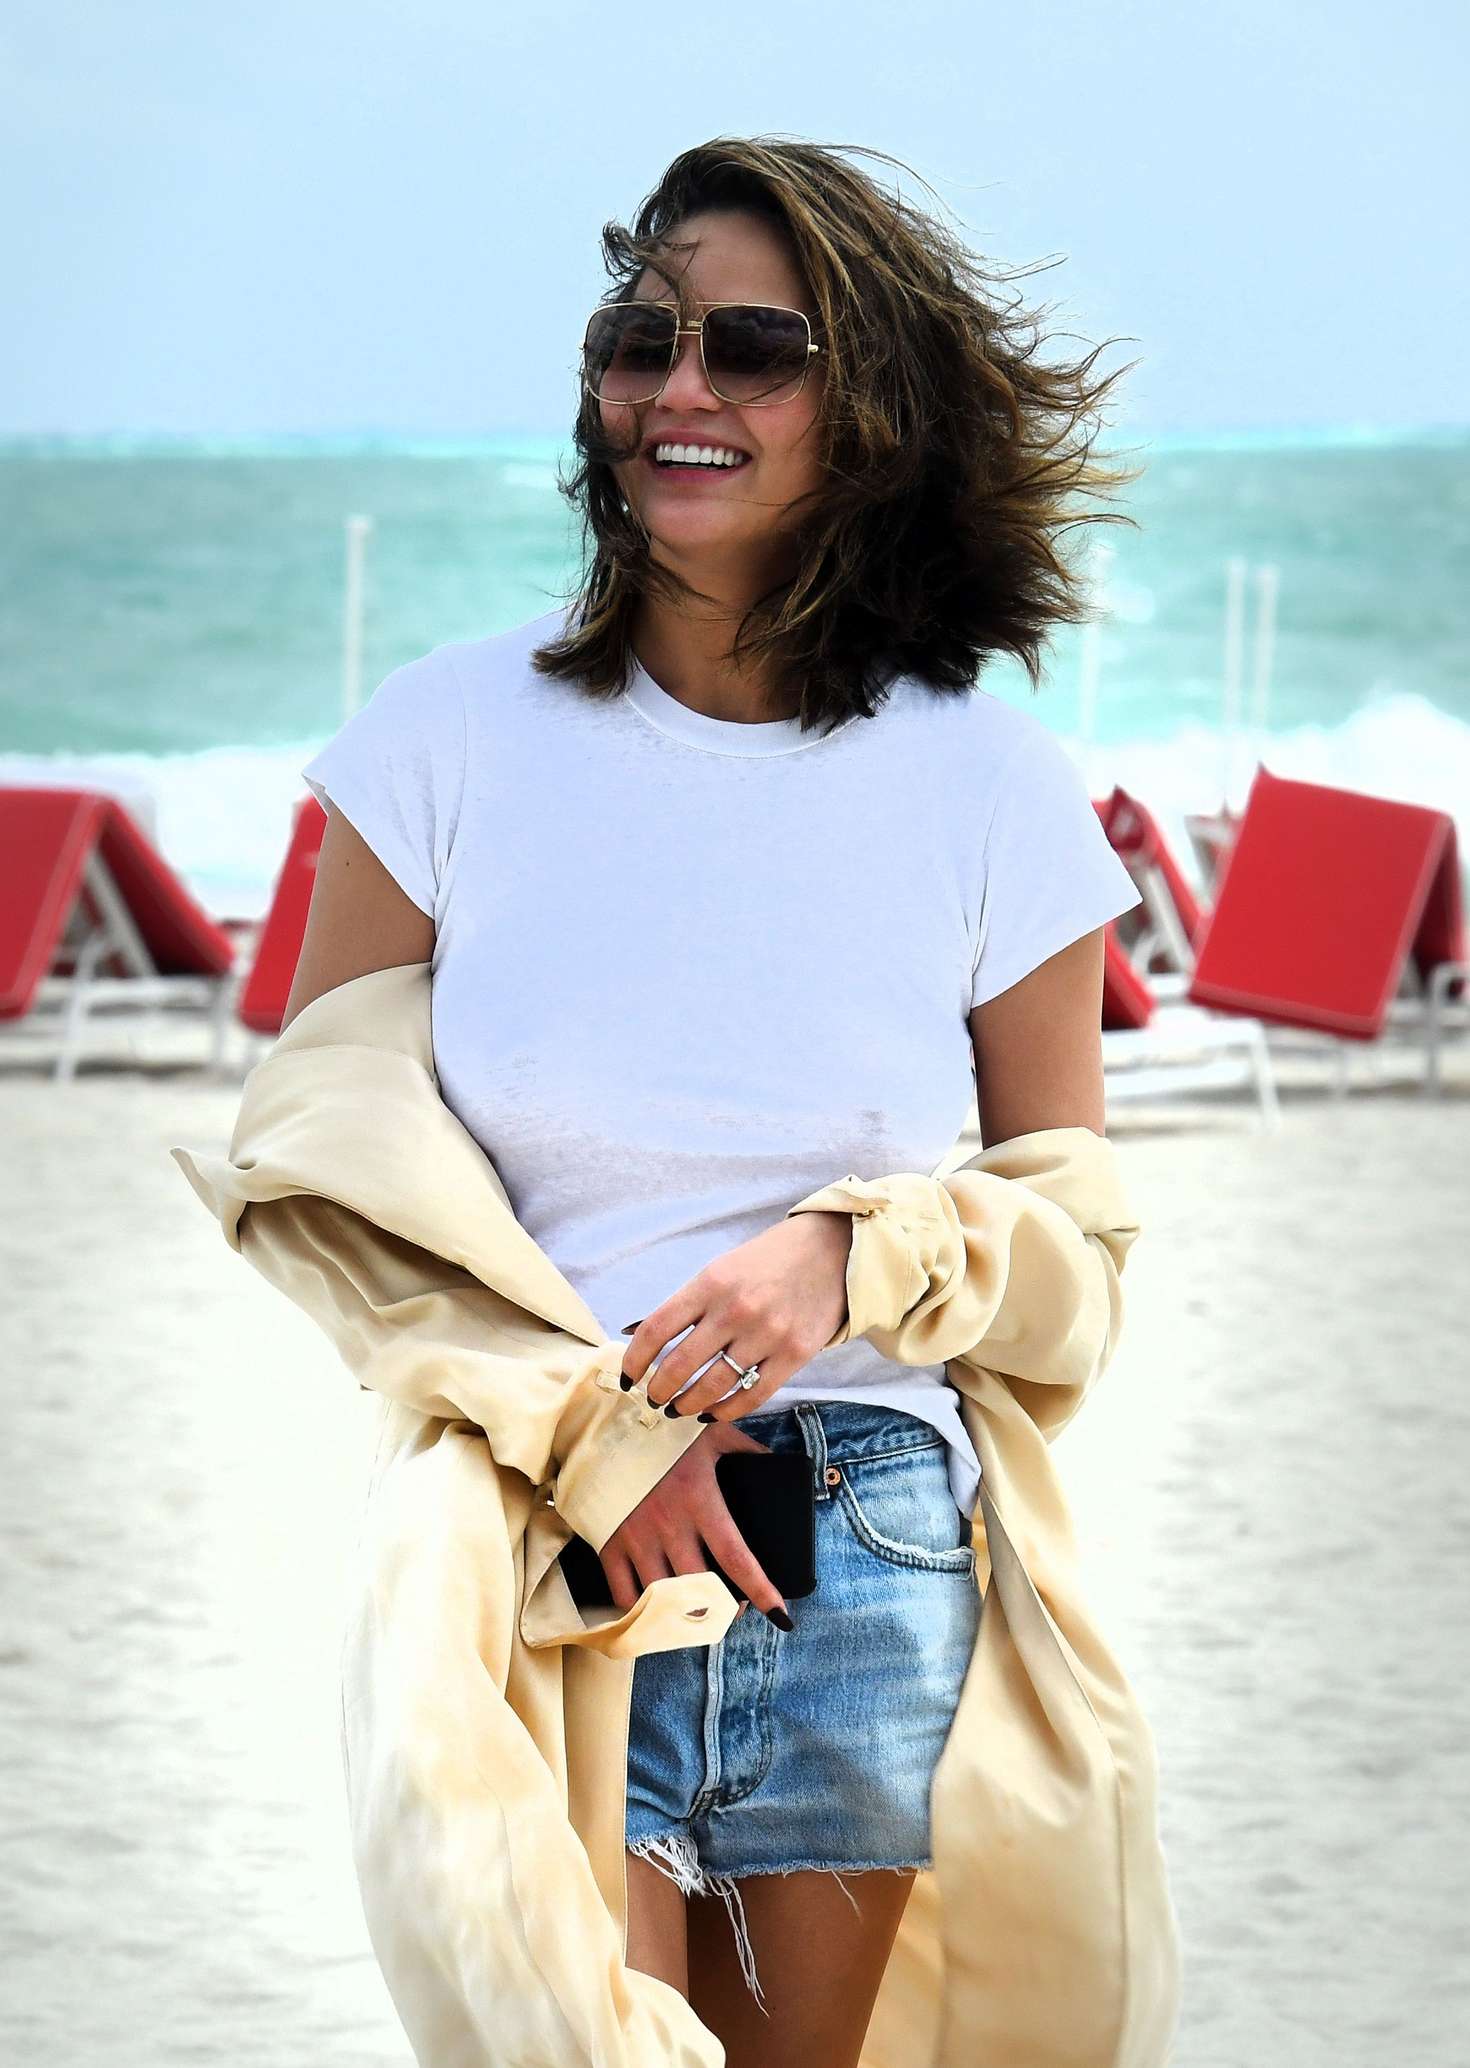 Chrissy Teigen in Jeans Shorts on the Beach in Miami. 